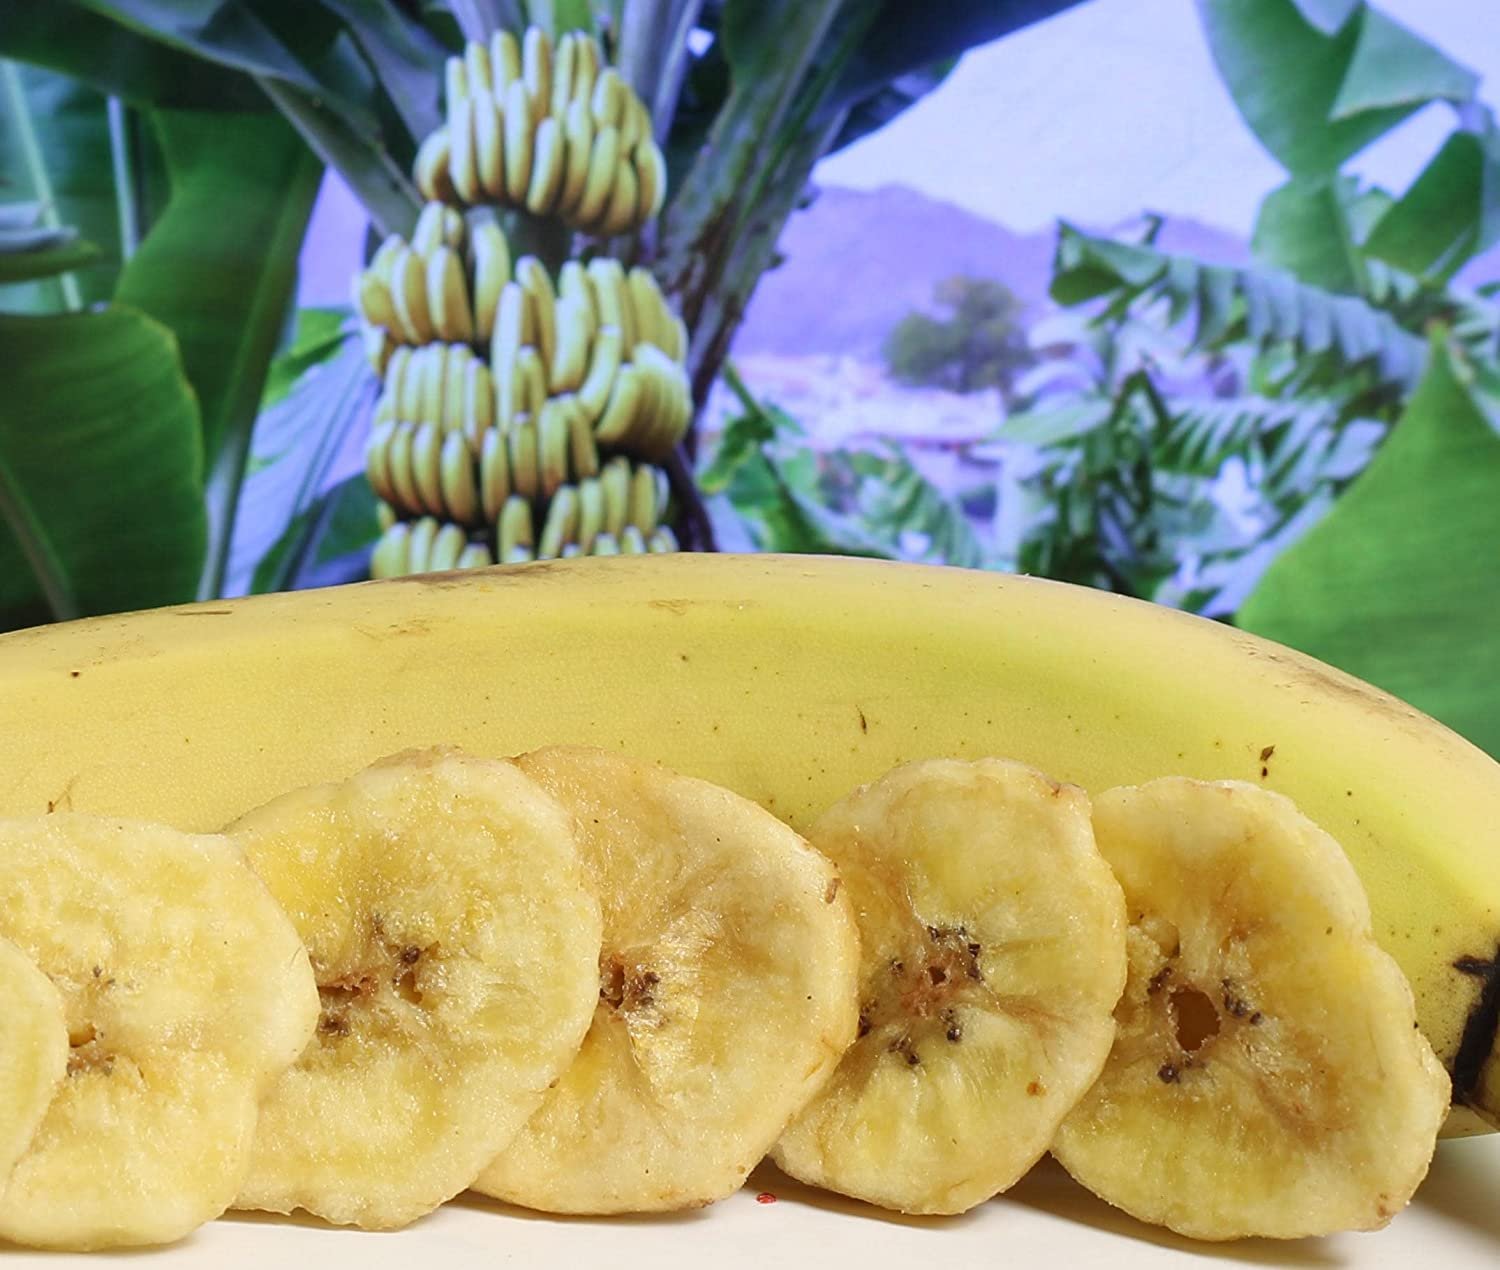 Organic Dried Banana Chips 1.5 lbs Jumbo Jar – Its Delish